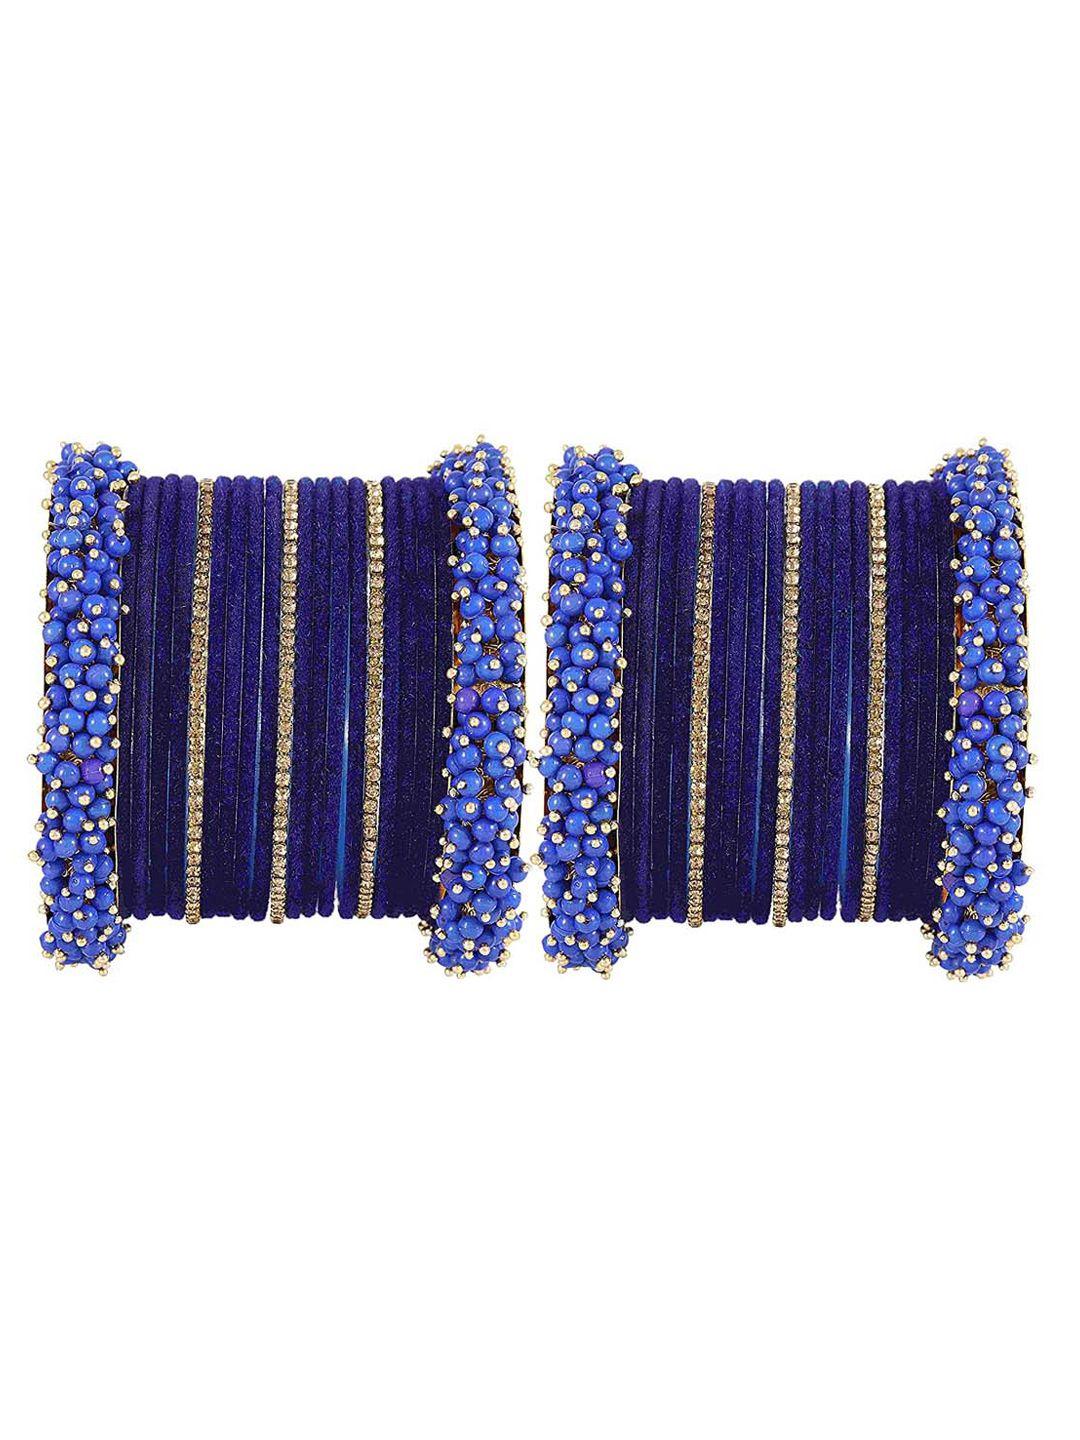 nmii set of 42 zircon gemstone studded antique bangles